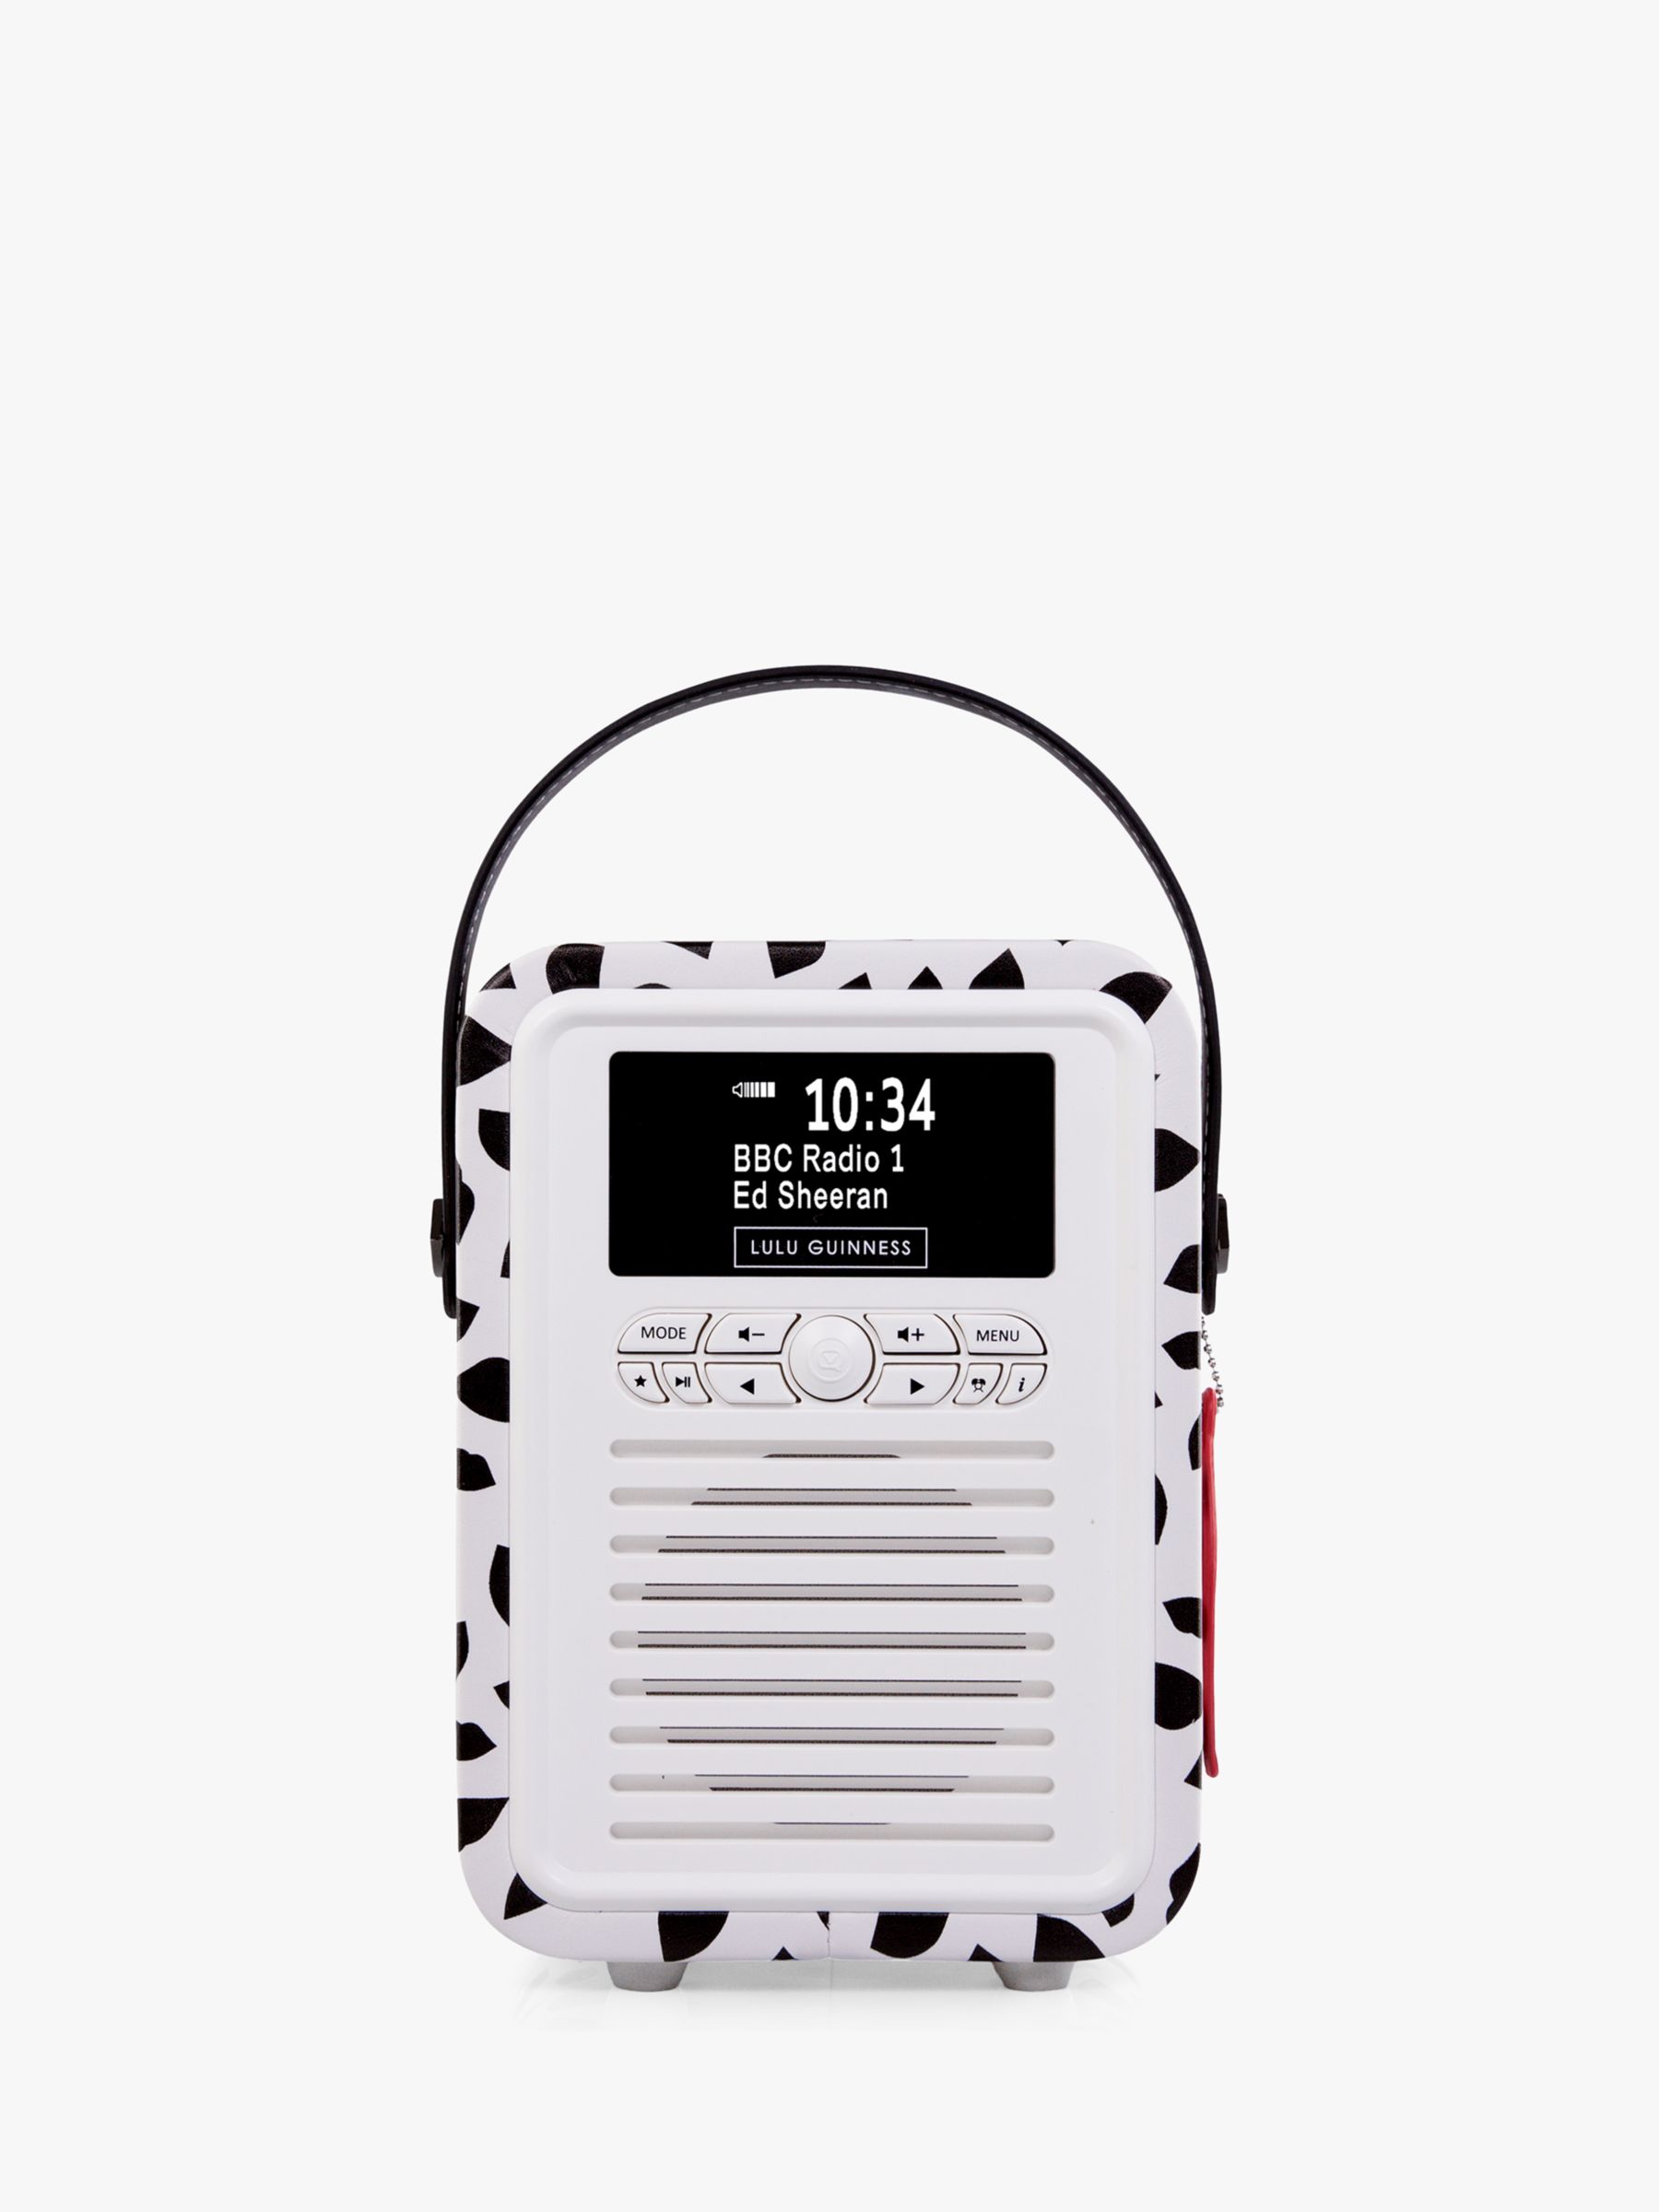 FM Radio Bluetooth Speaker Lulu Guinness Black Lip VQ Hepburn MKII Portable DAB 